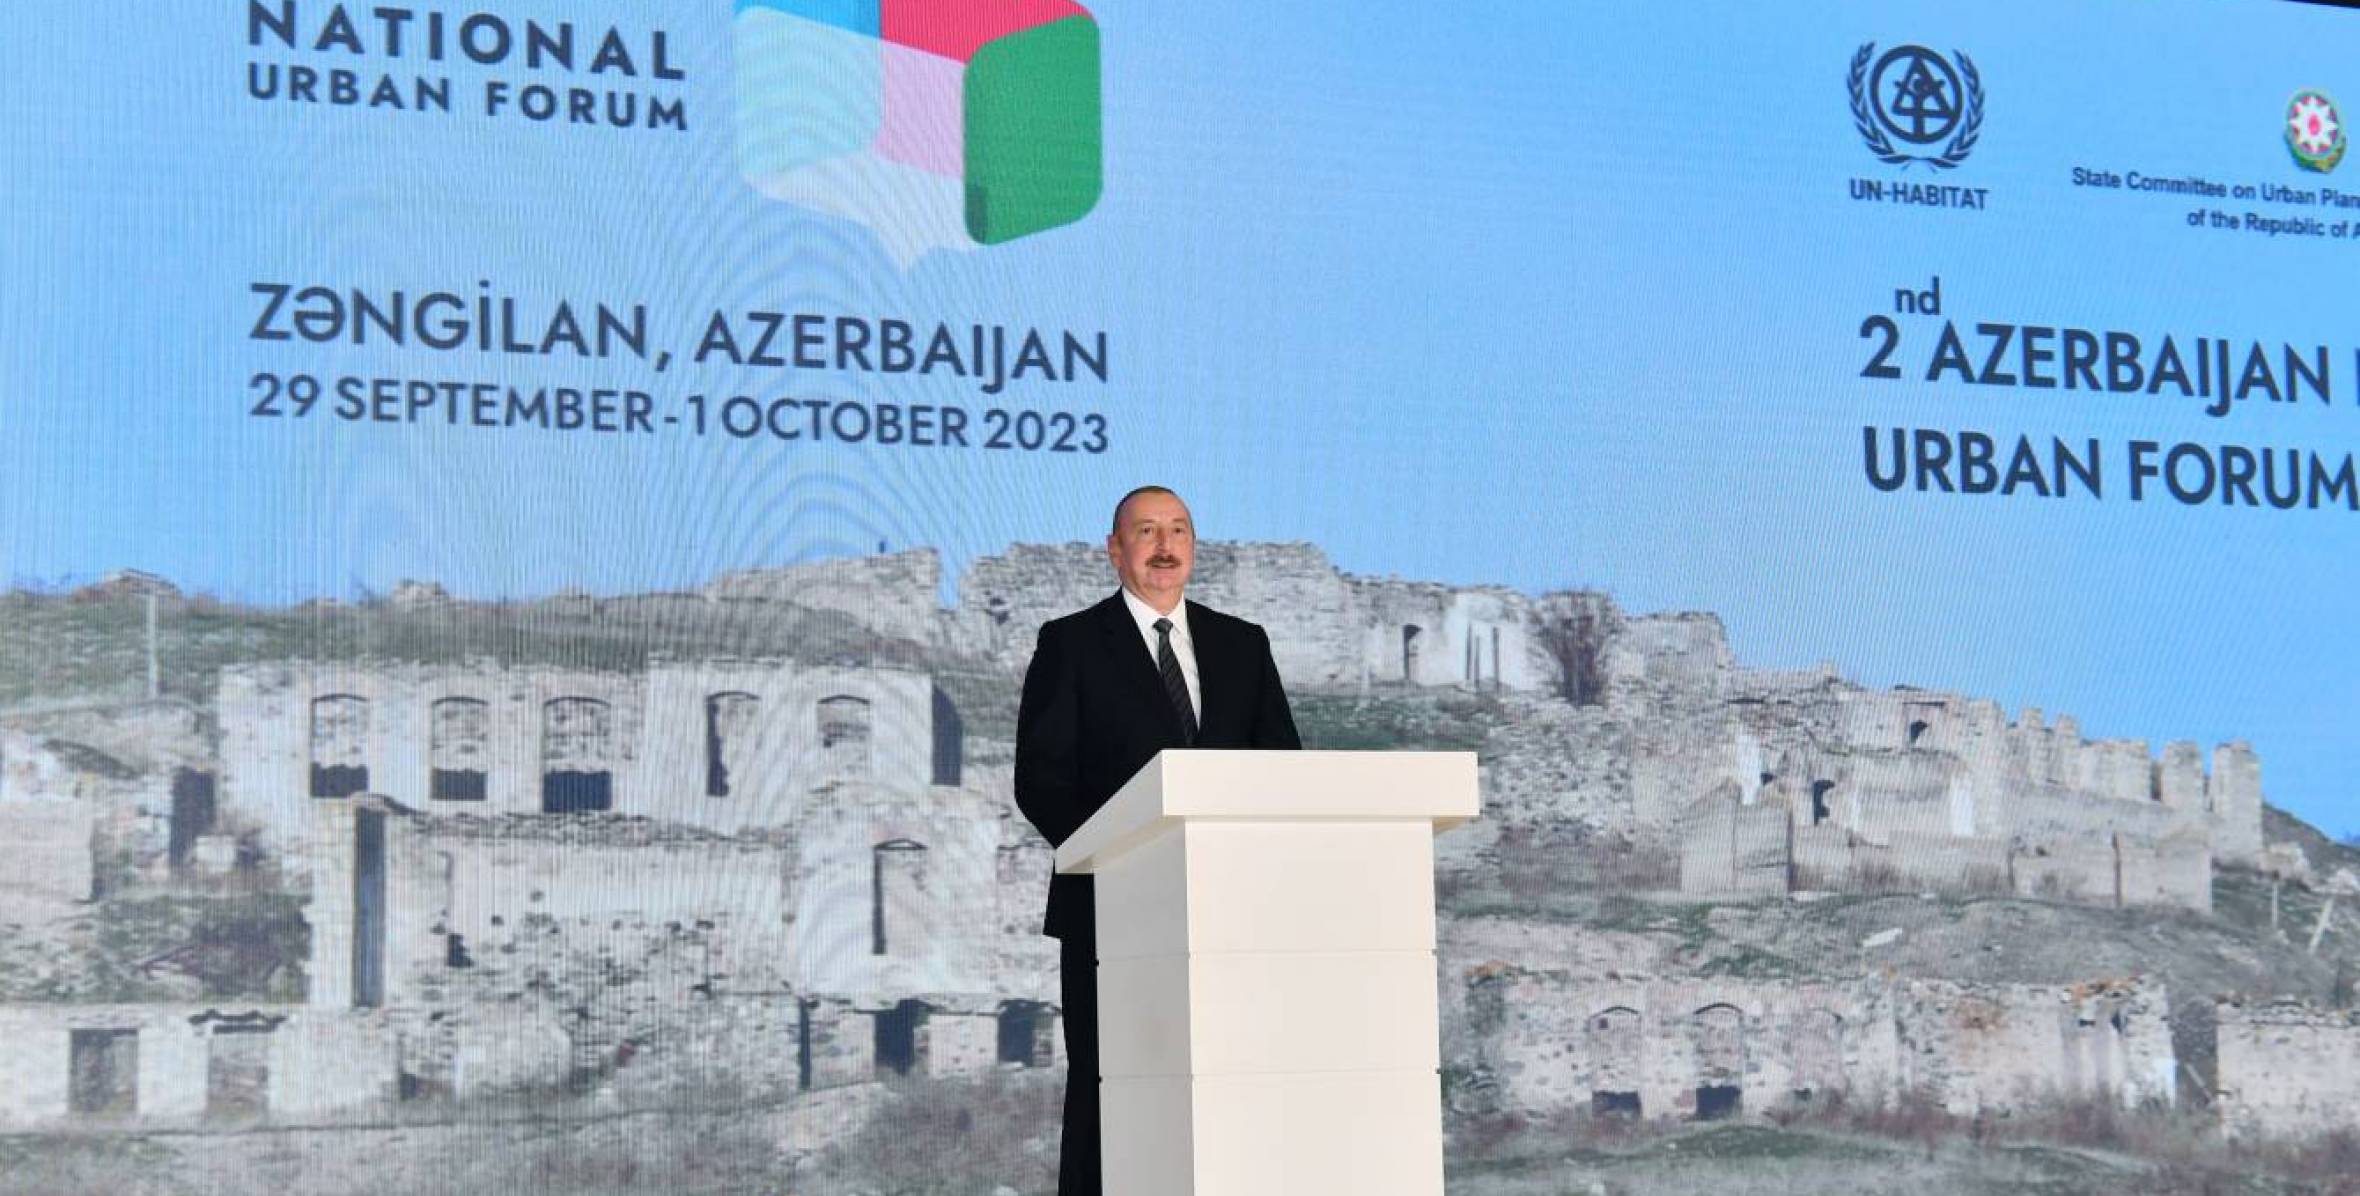 Speech by Ilham Aliyev at the 2nd Azerbaijan National Urban Forum in Zangilan